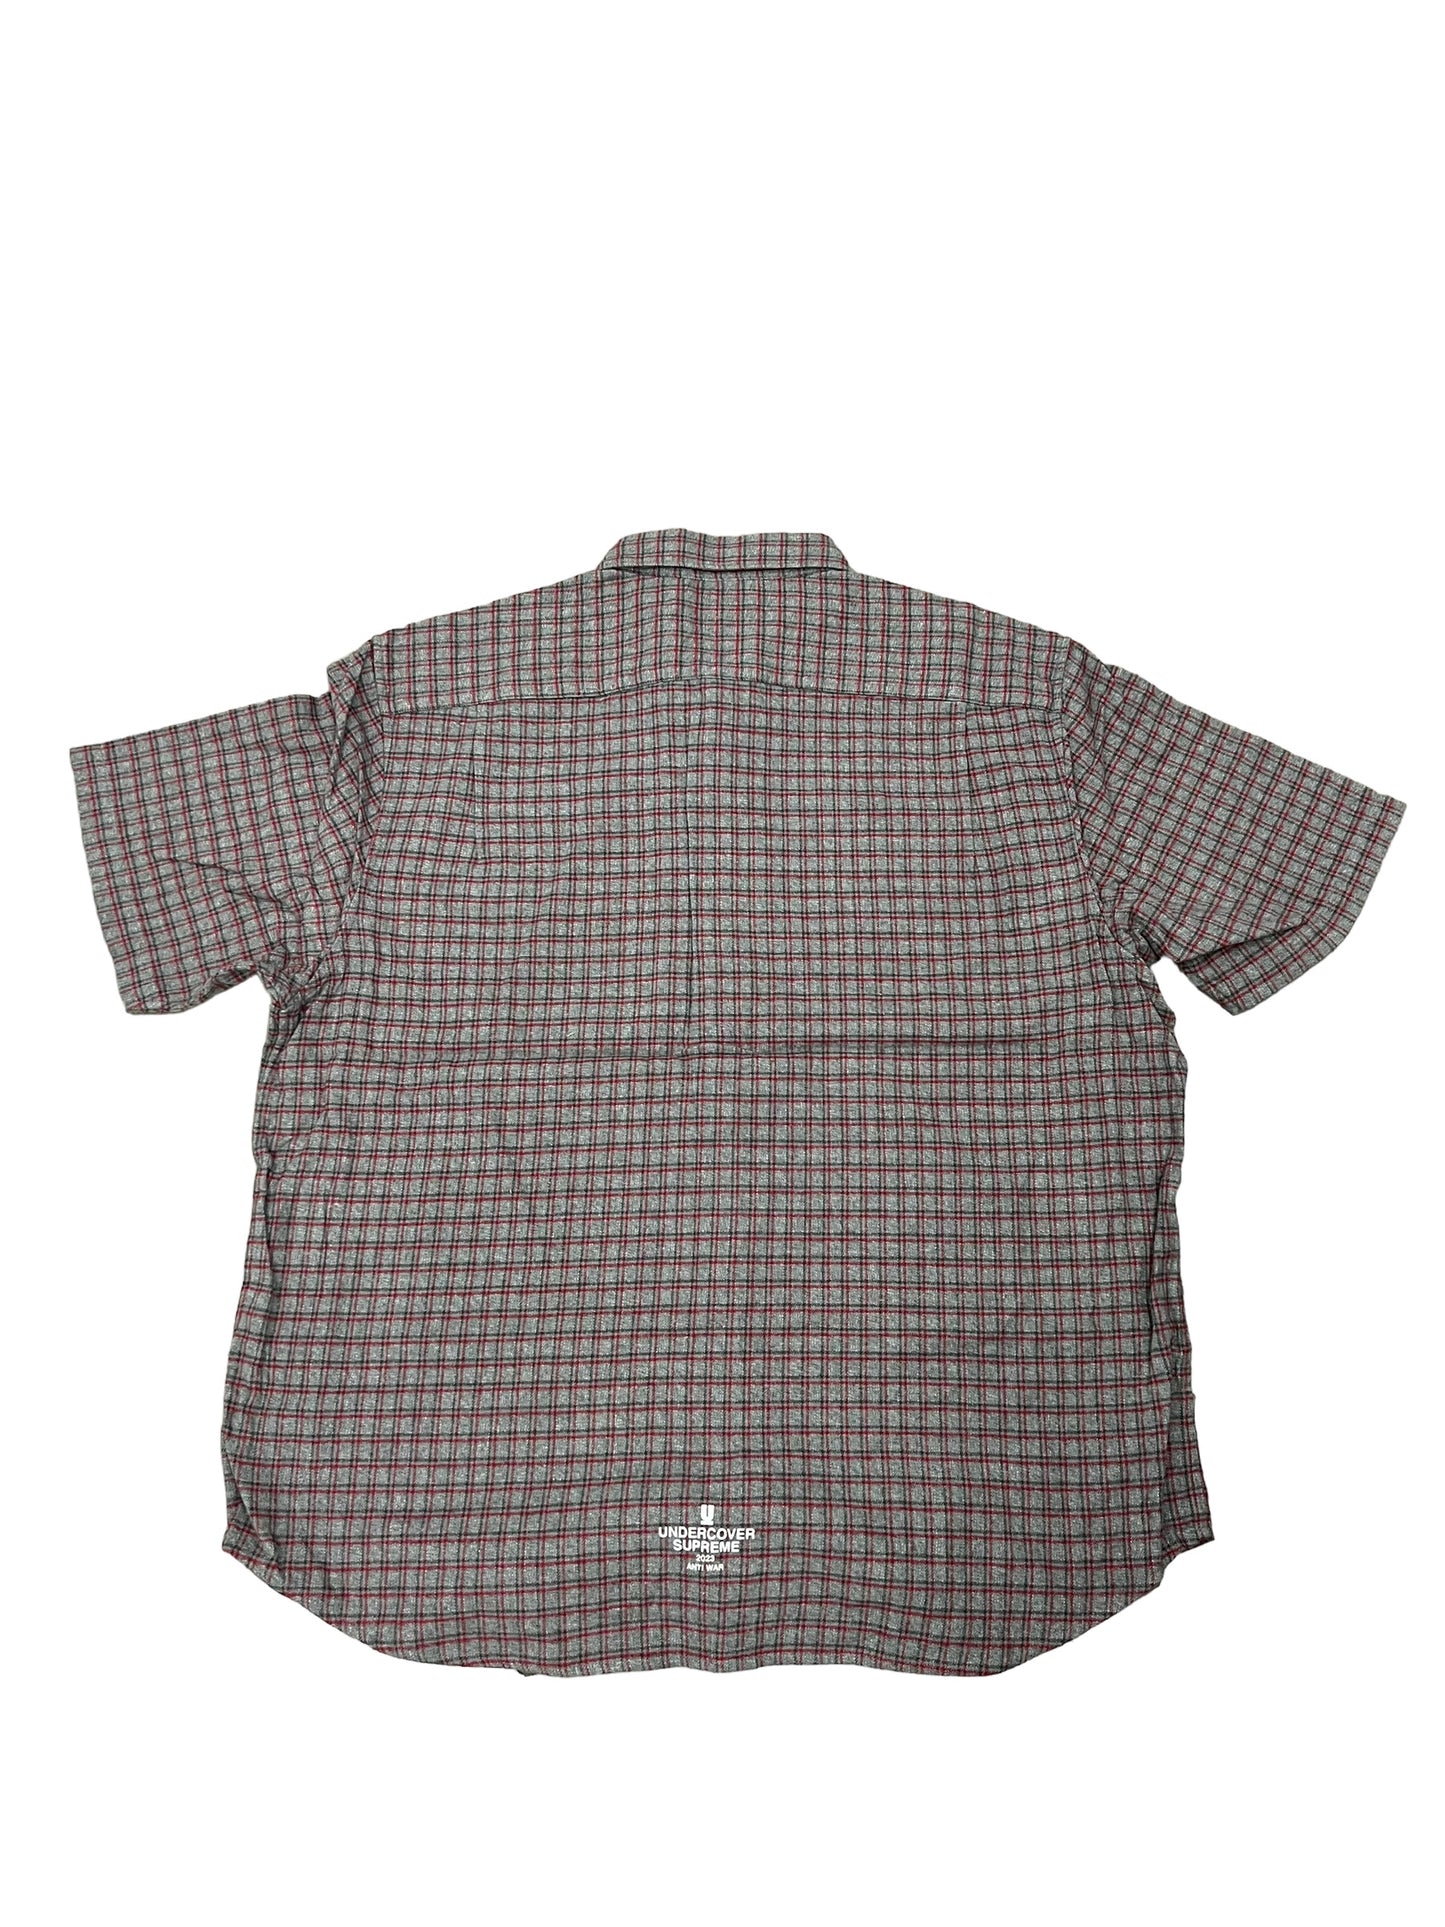 Supreme/UNDERCOVER Flannel Shirt